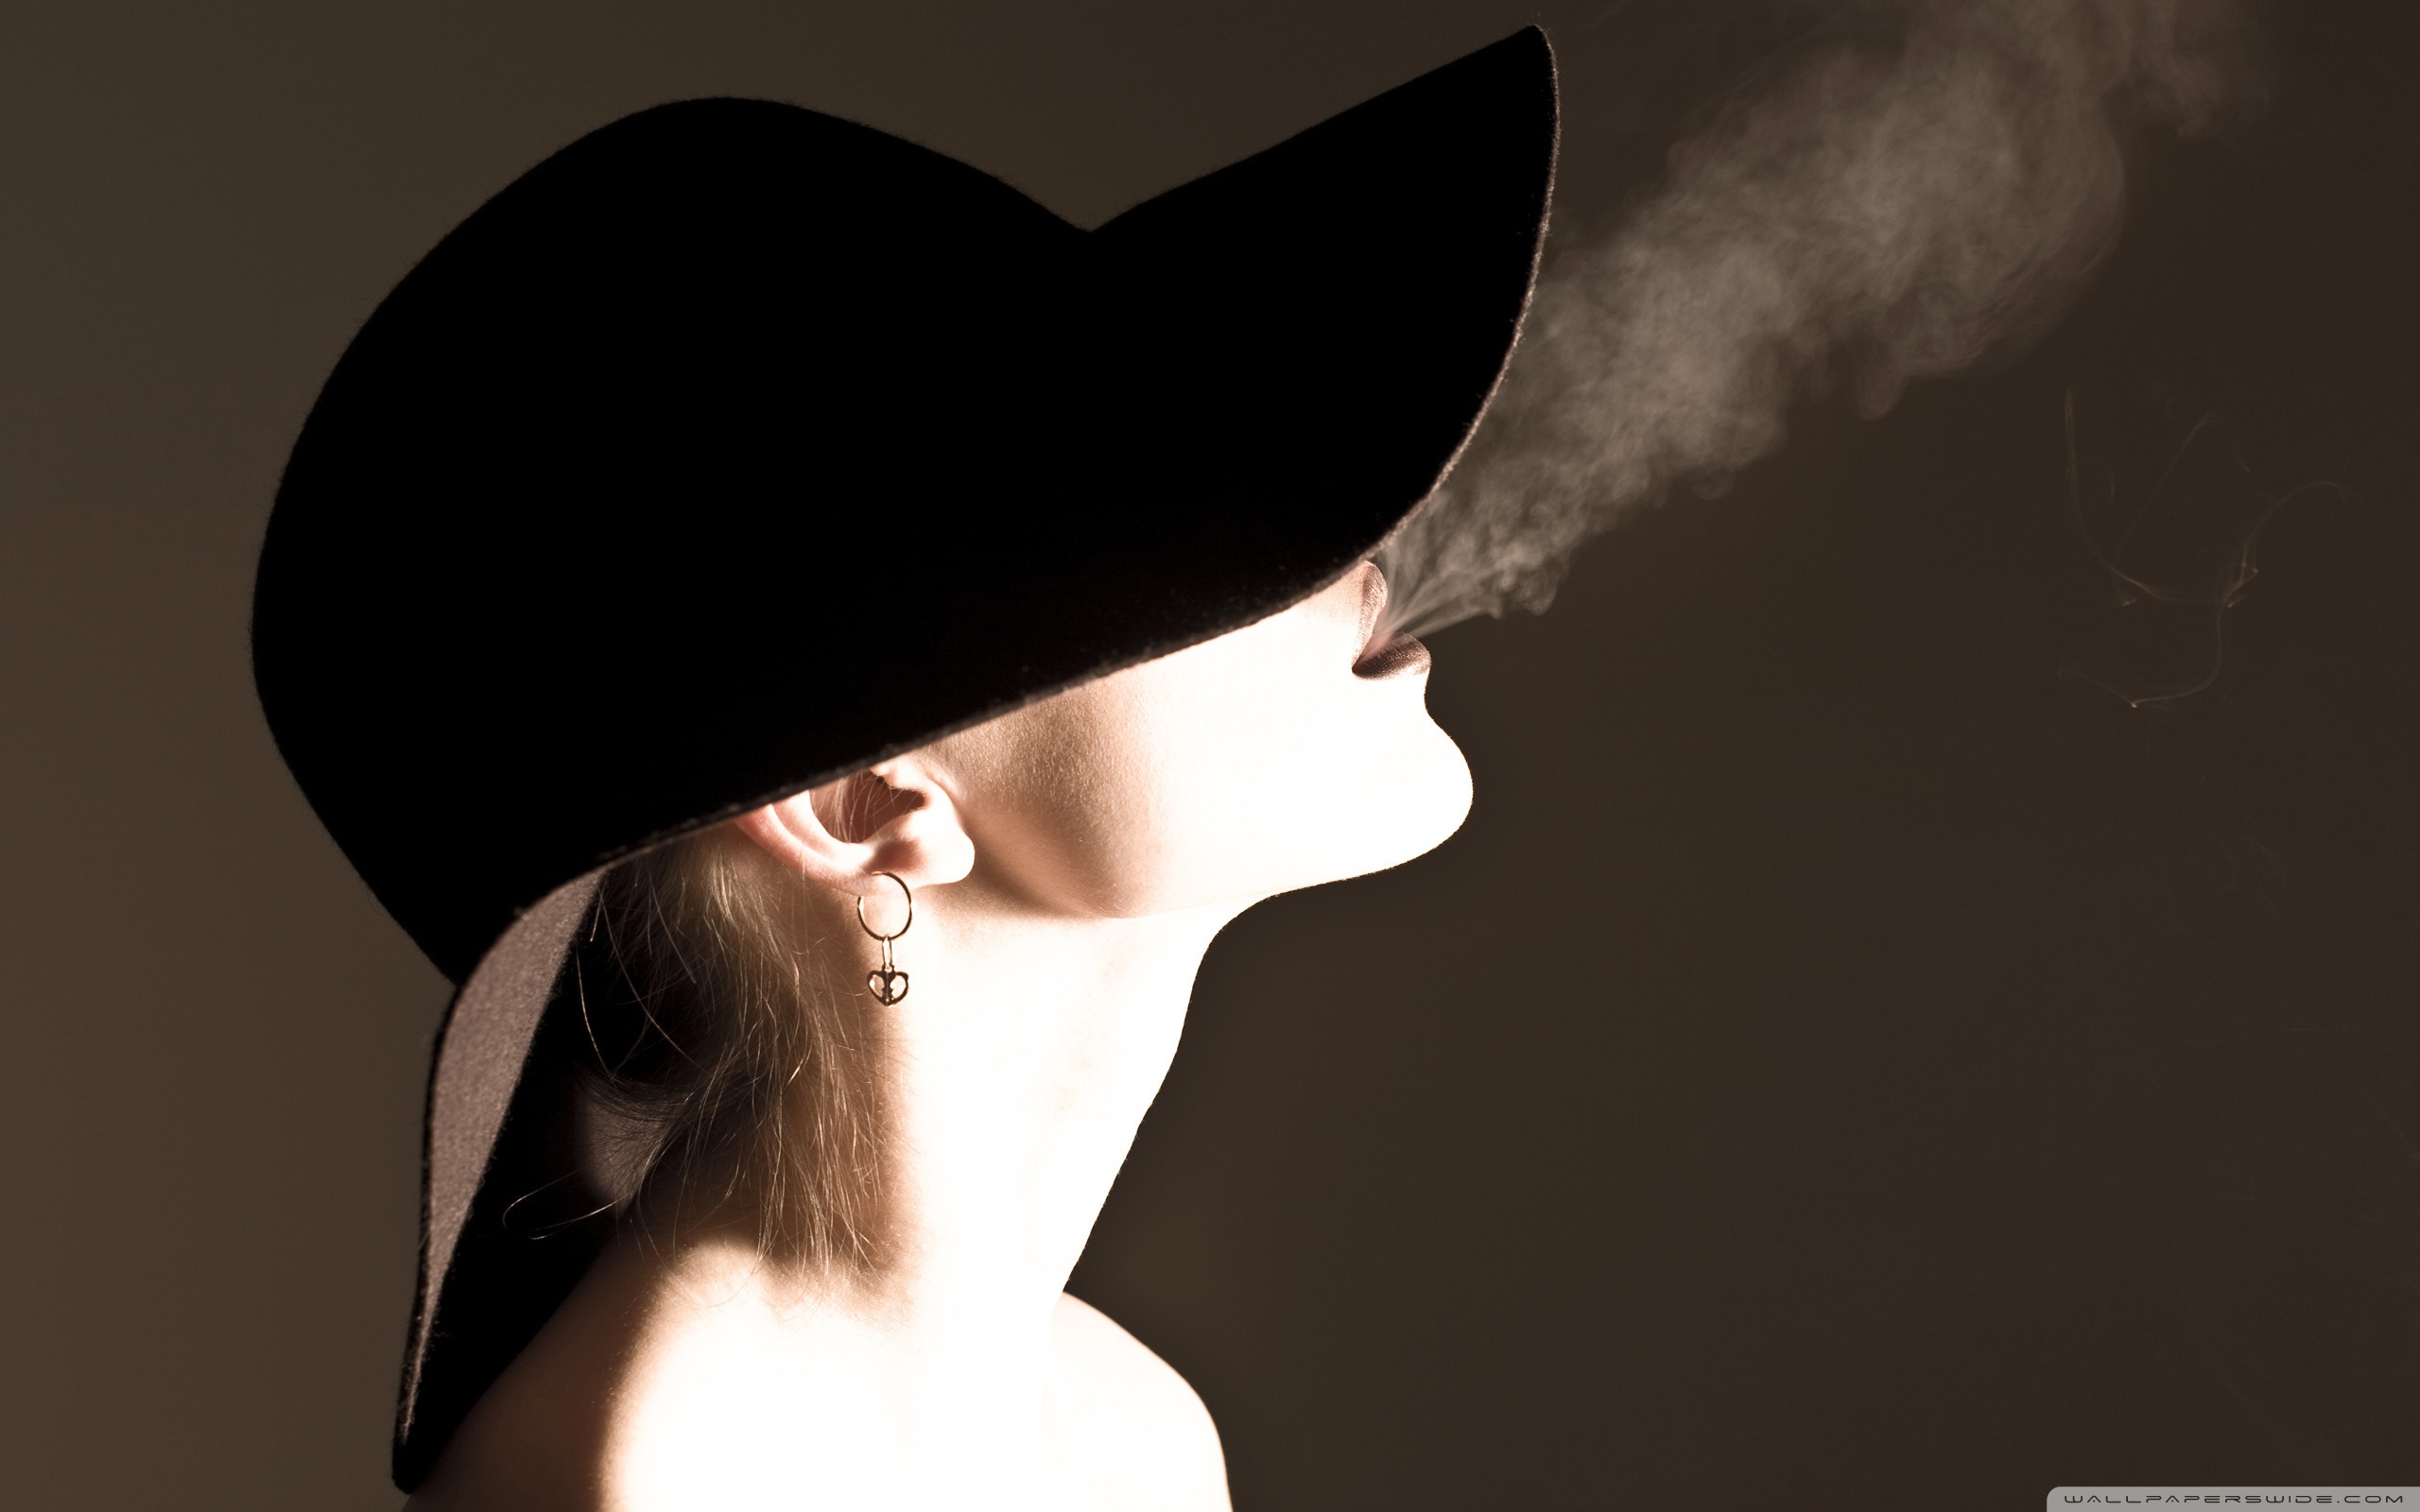 Аватарки курящие. Девушка в шляпе. Загадочная девушка в шляпе. Курящая девушка в шляпе. Девушка в шляпе с сигаретой.